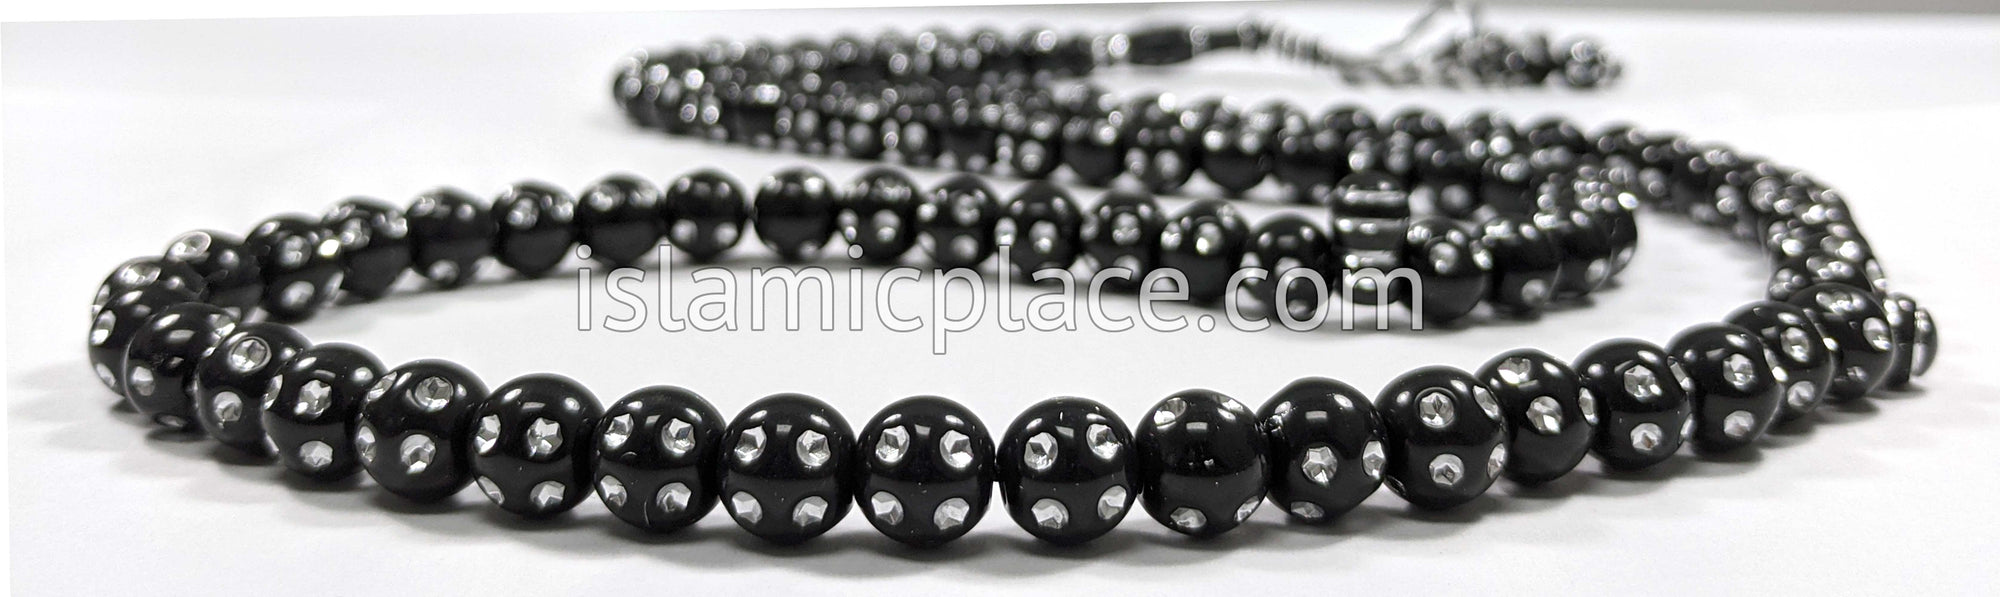 Black - Nuqta Design Tasbih Prayer Beads